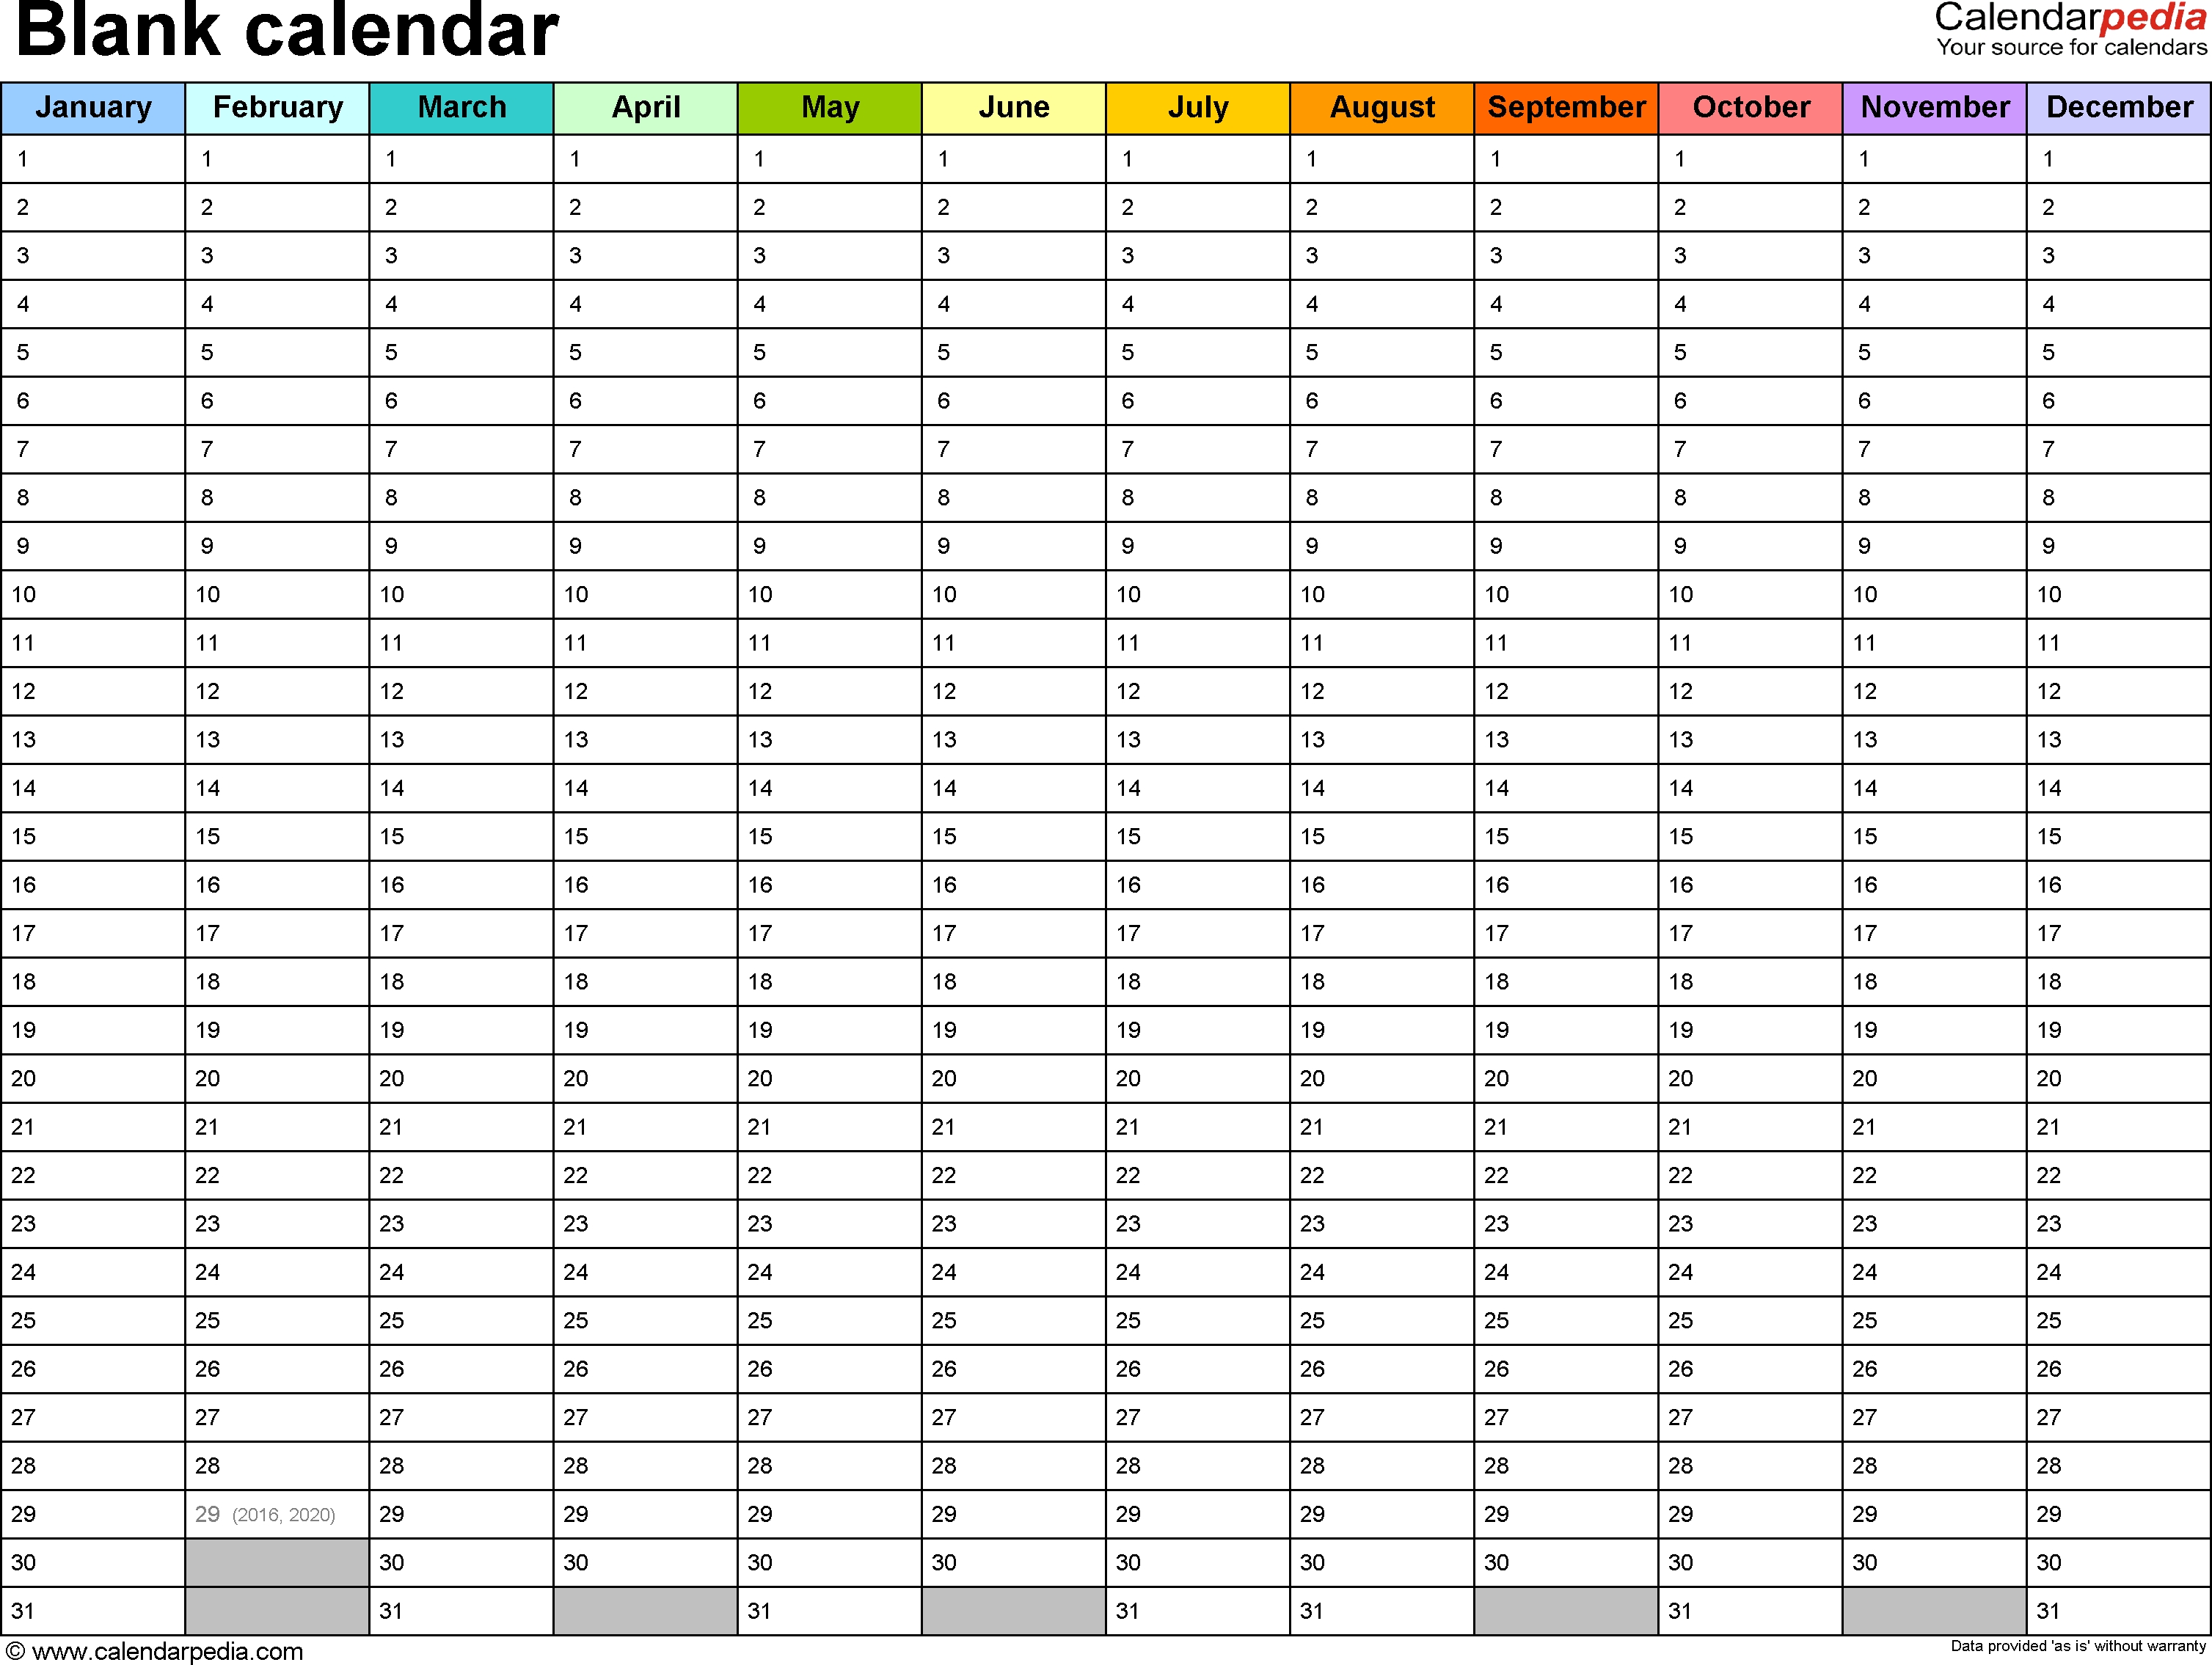 Blank Calendar - 9 Free Printable Microsoft Word Templates-3 Month Blank Calendar Template